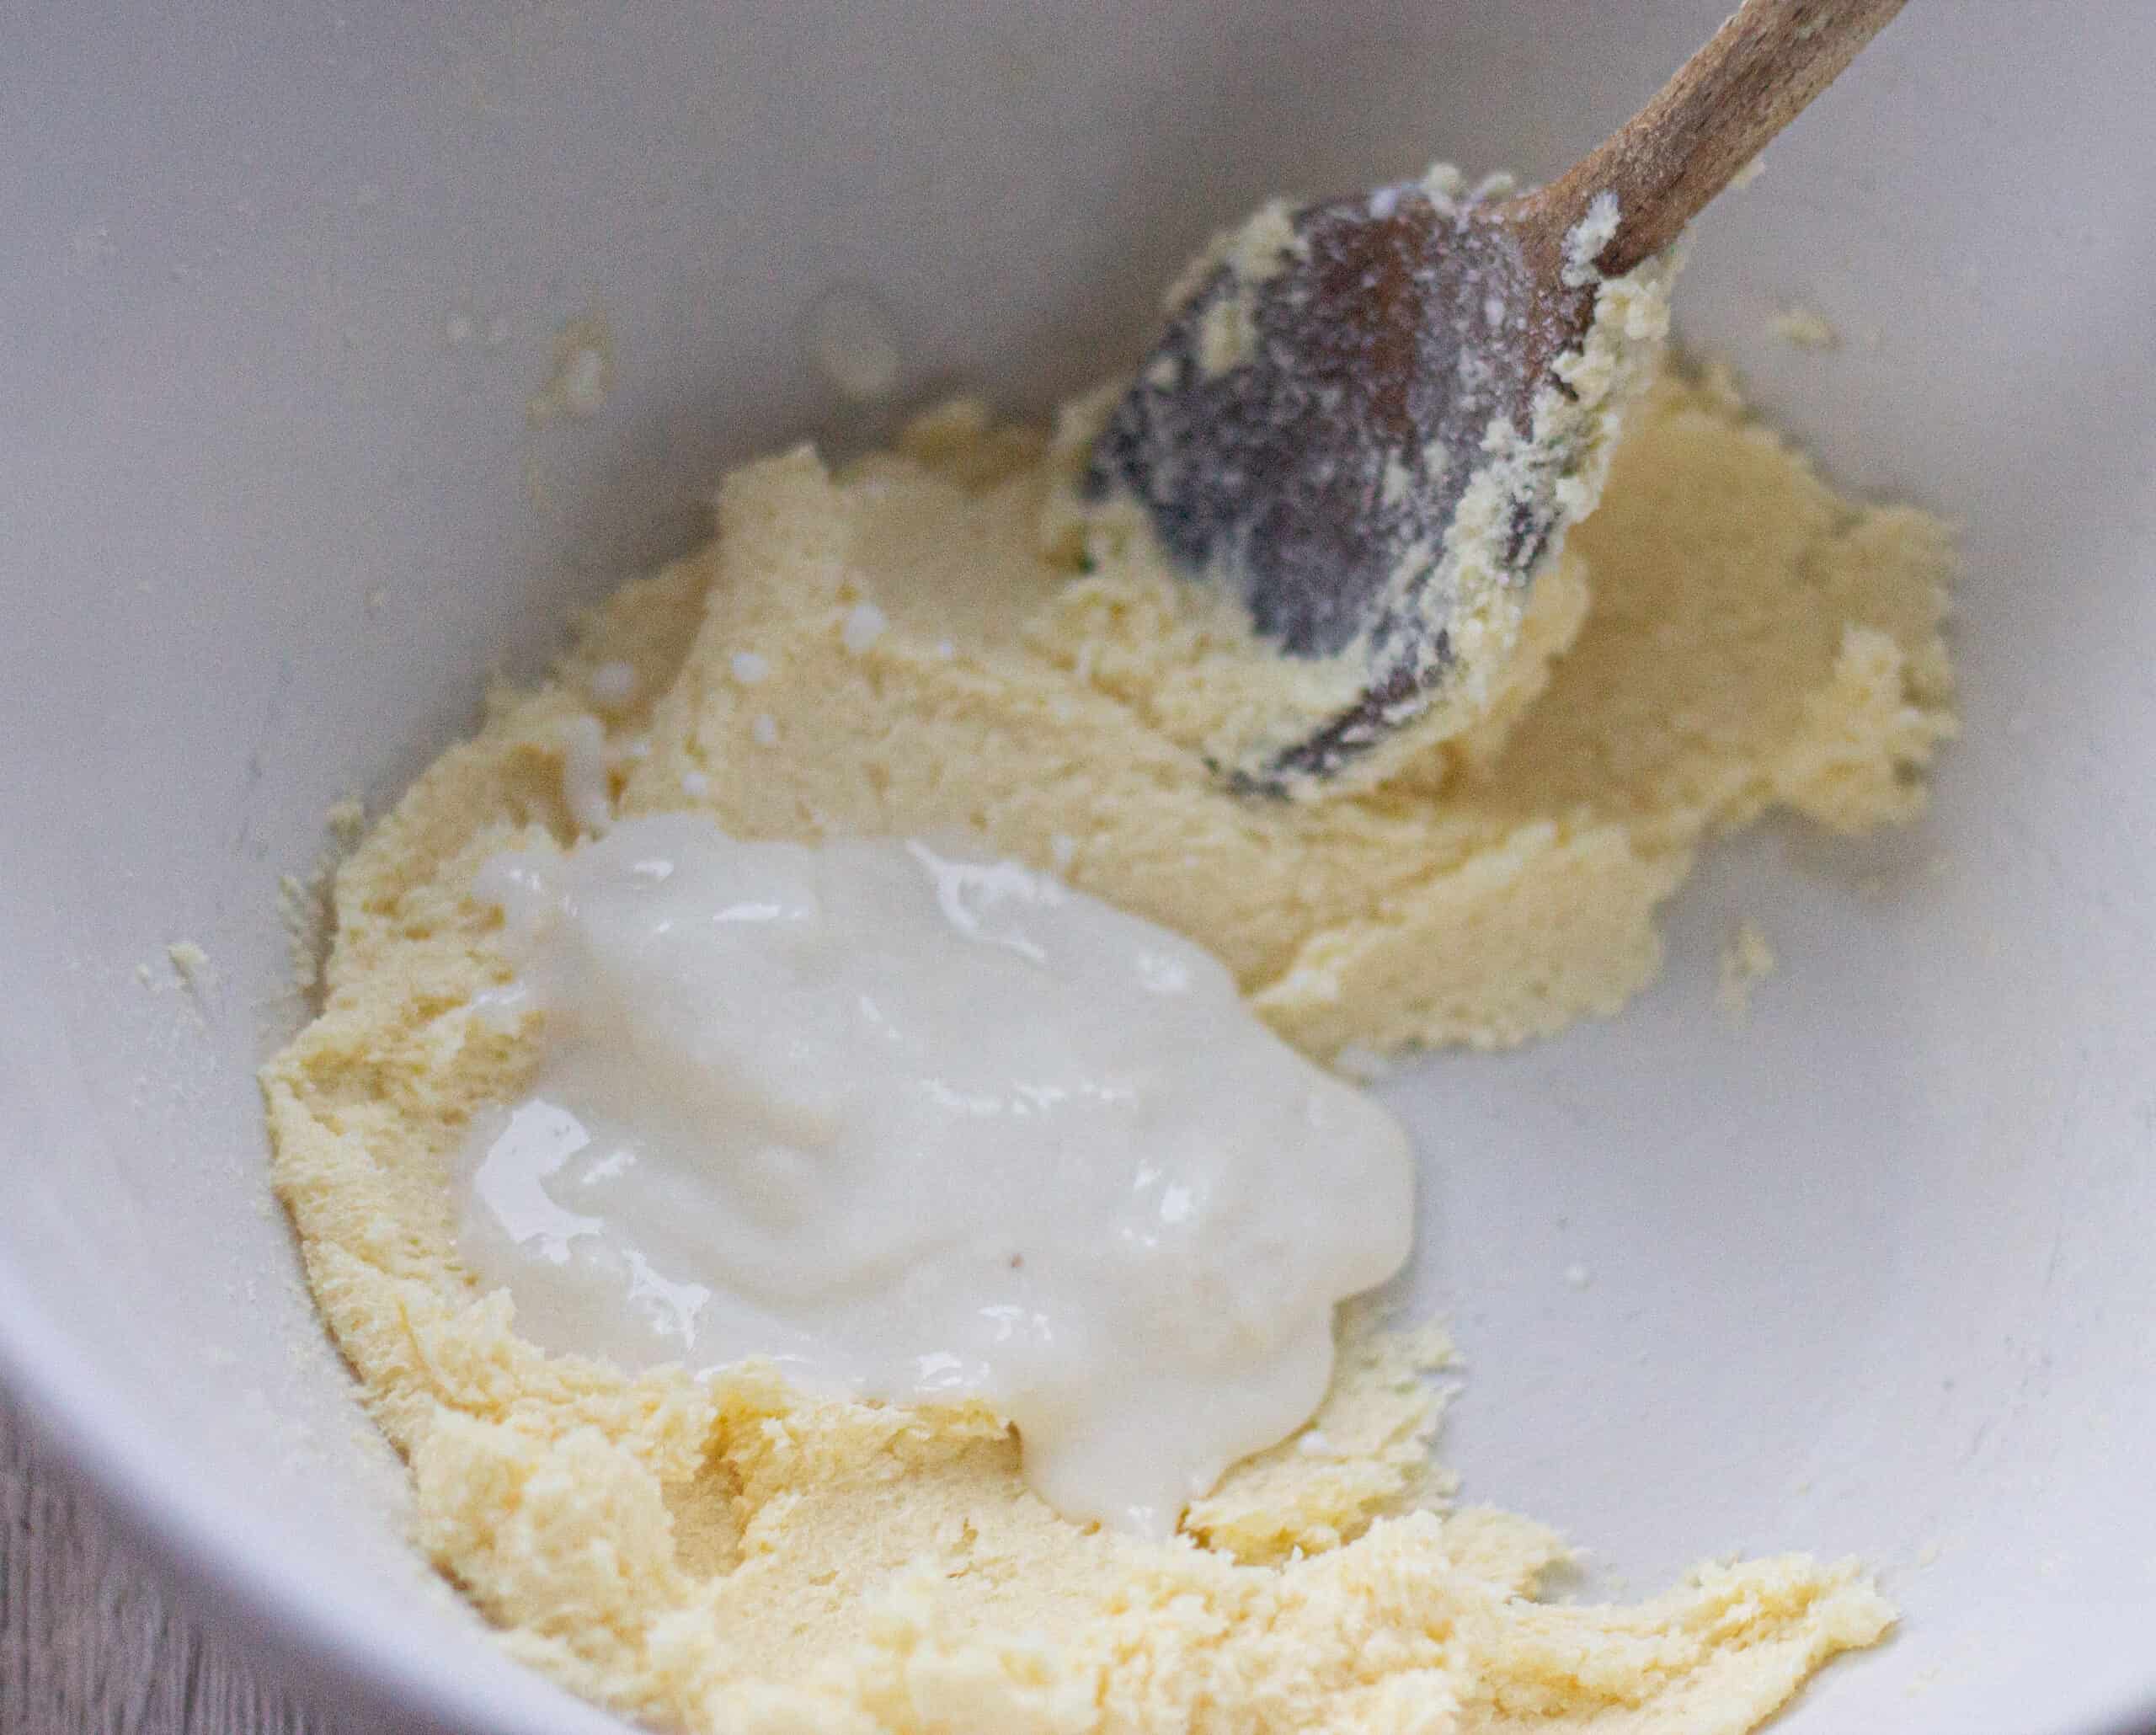 Adding yogurt to creamed butter and sugar